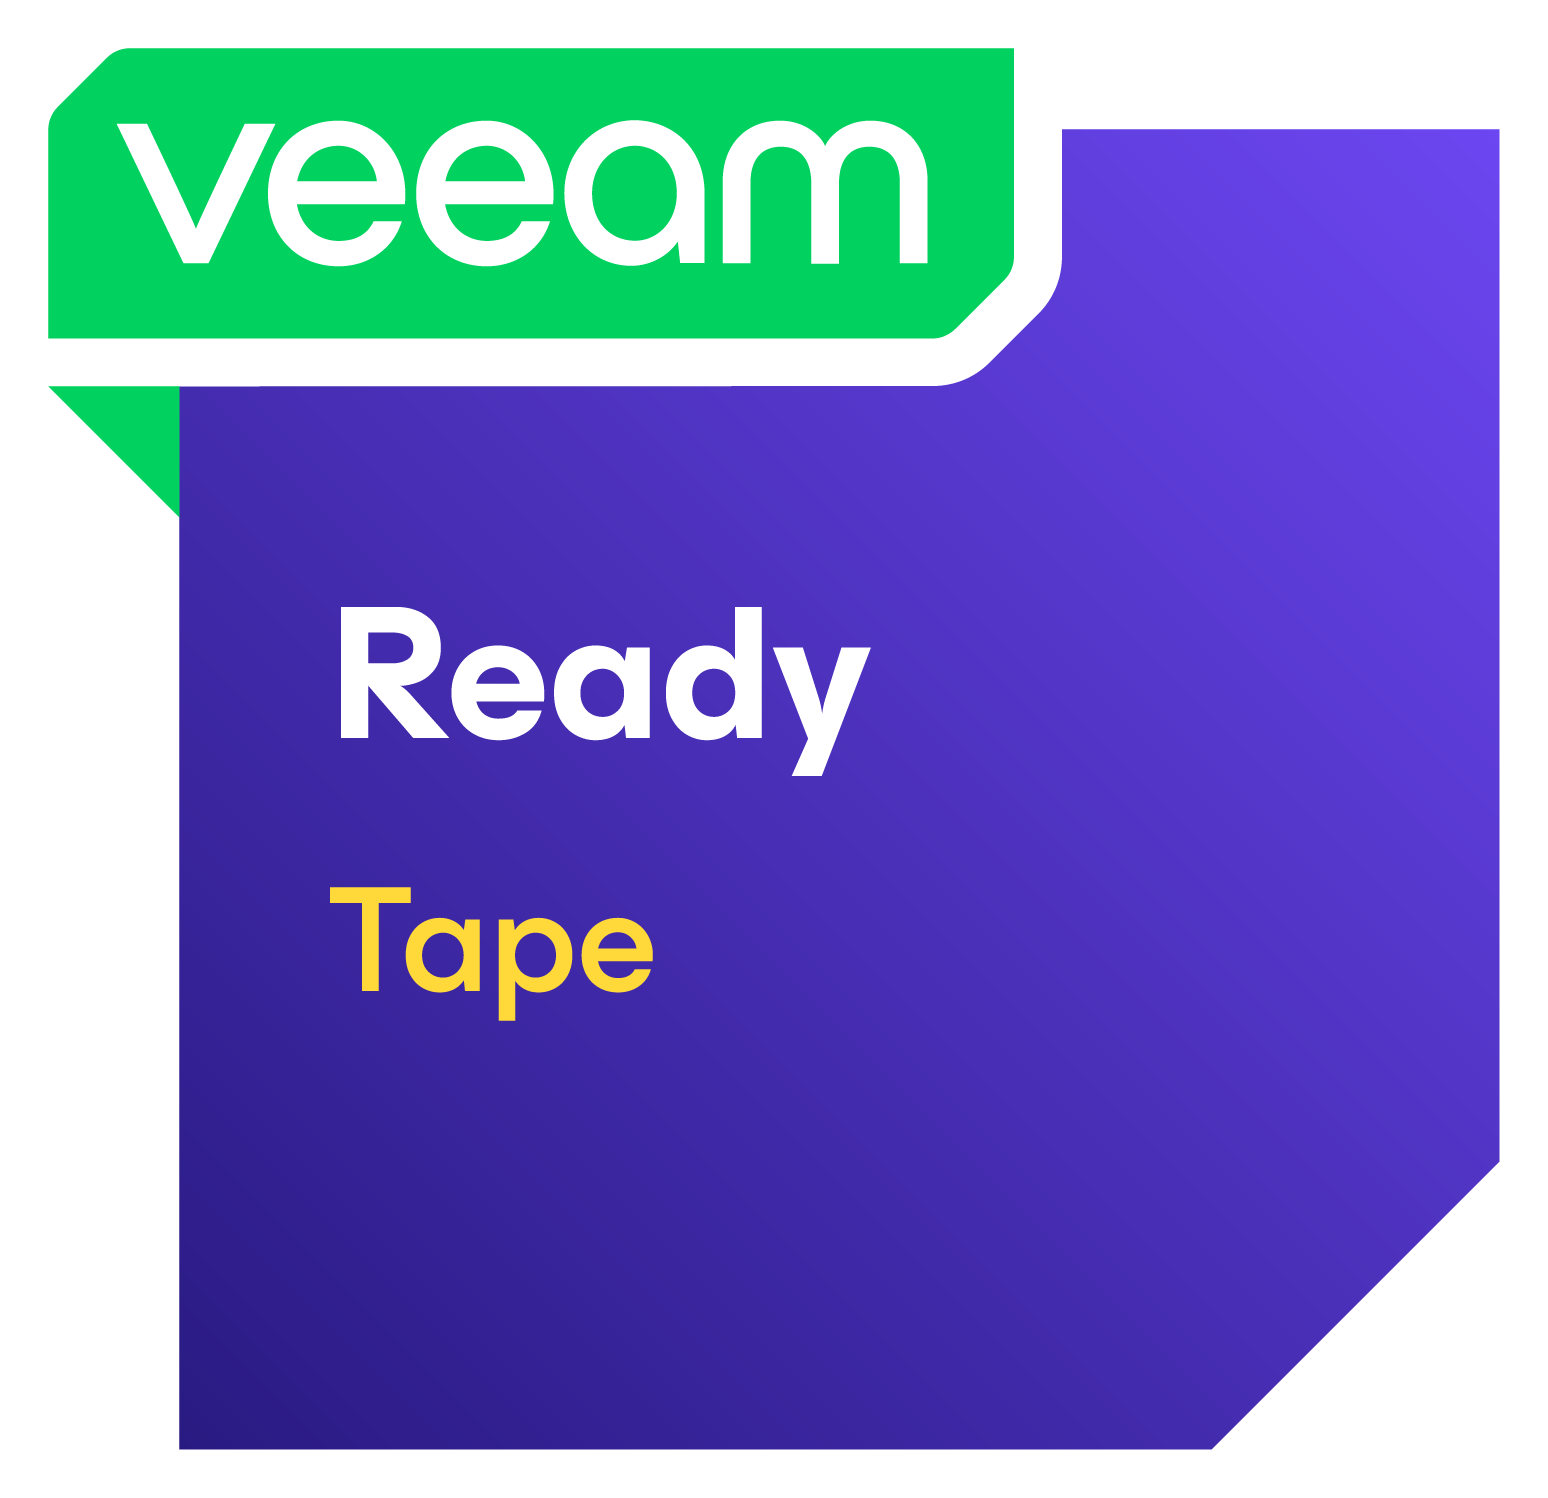 Veeam ready tape